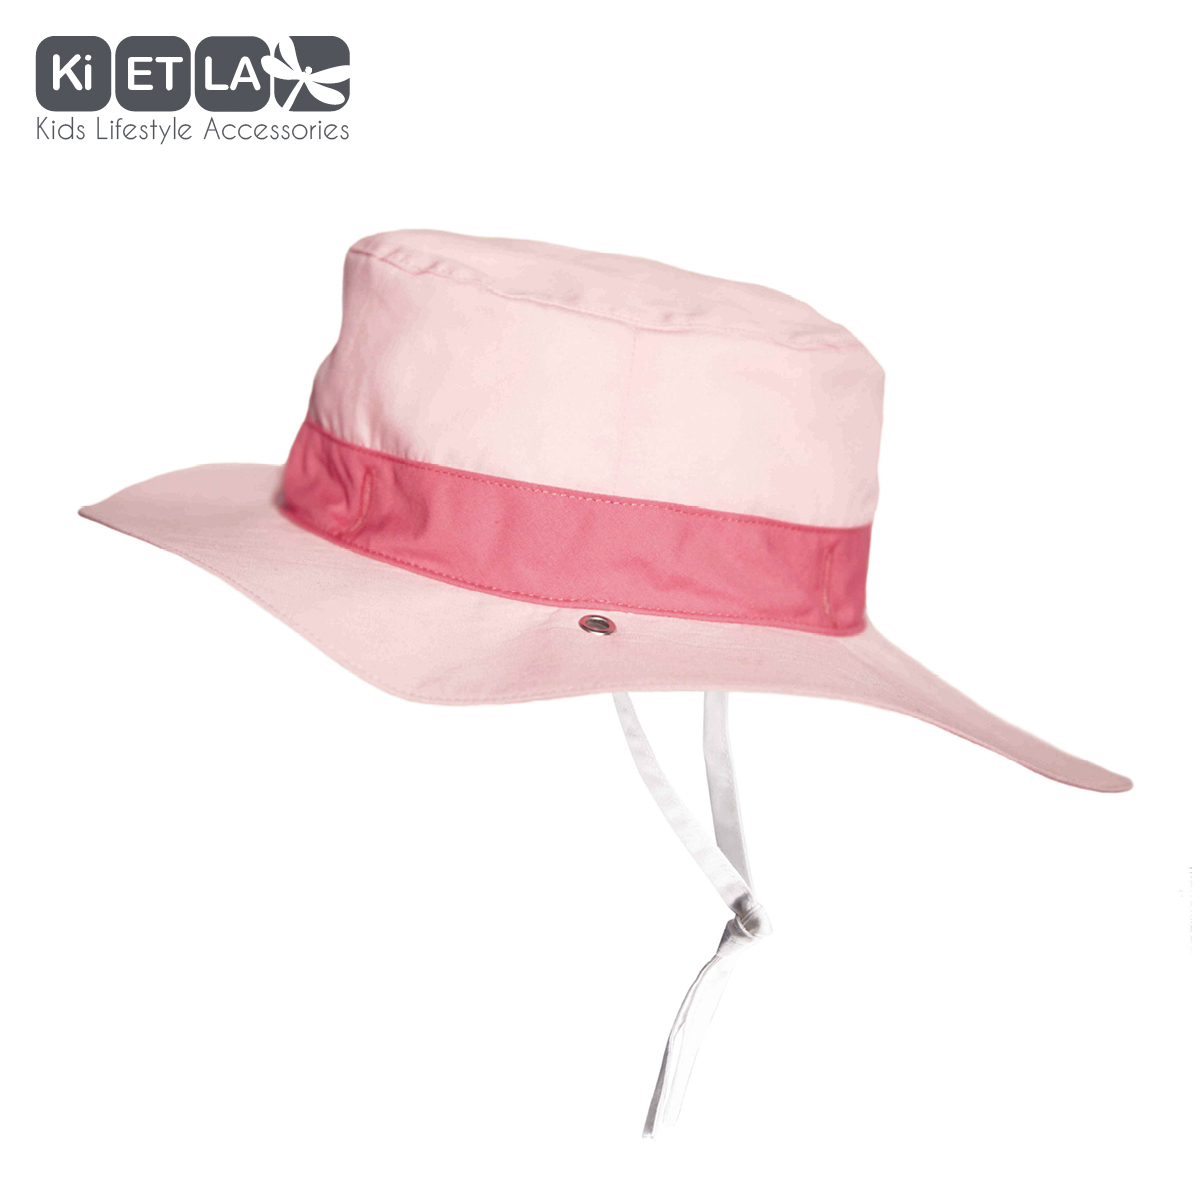 KiETLA obojstranný klobúčik s UV ochranou- panama pink- skladom